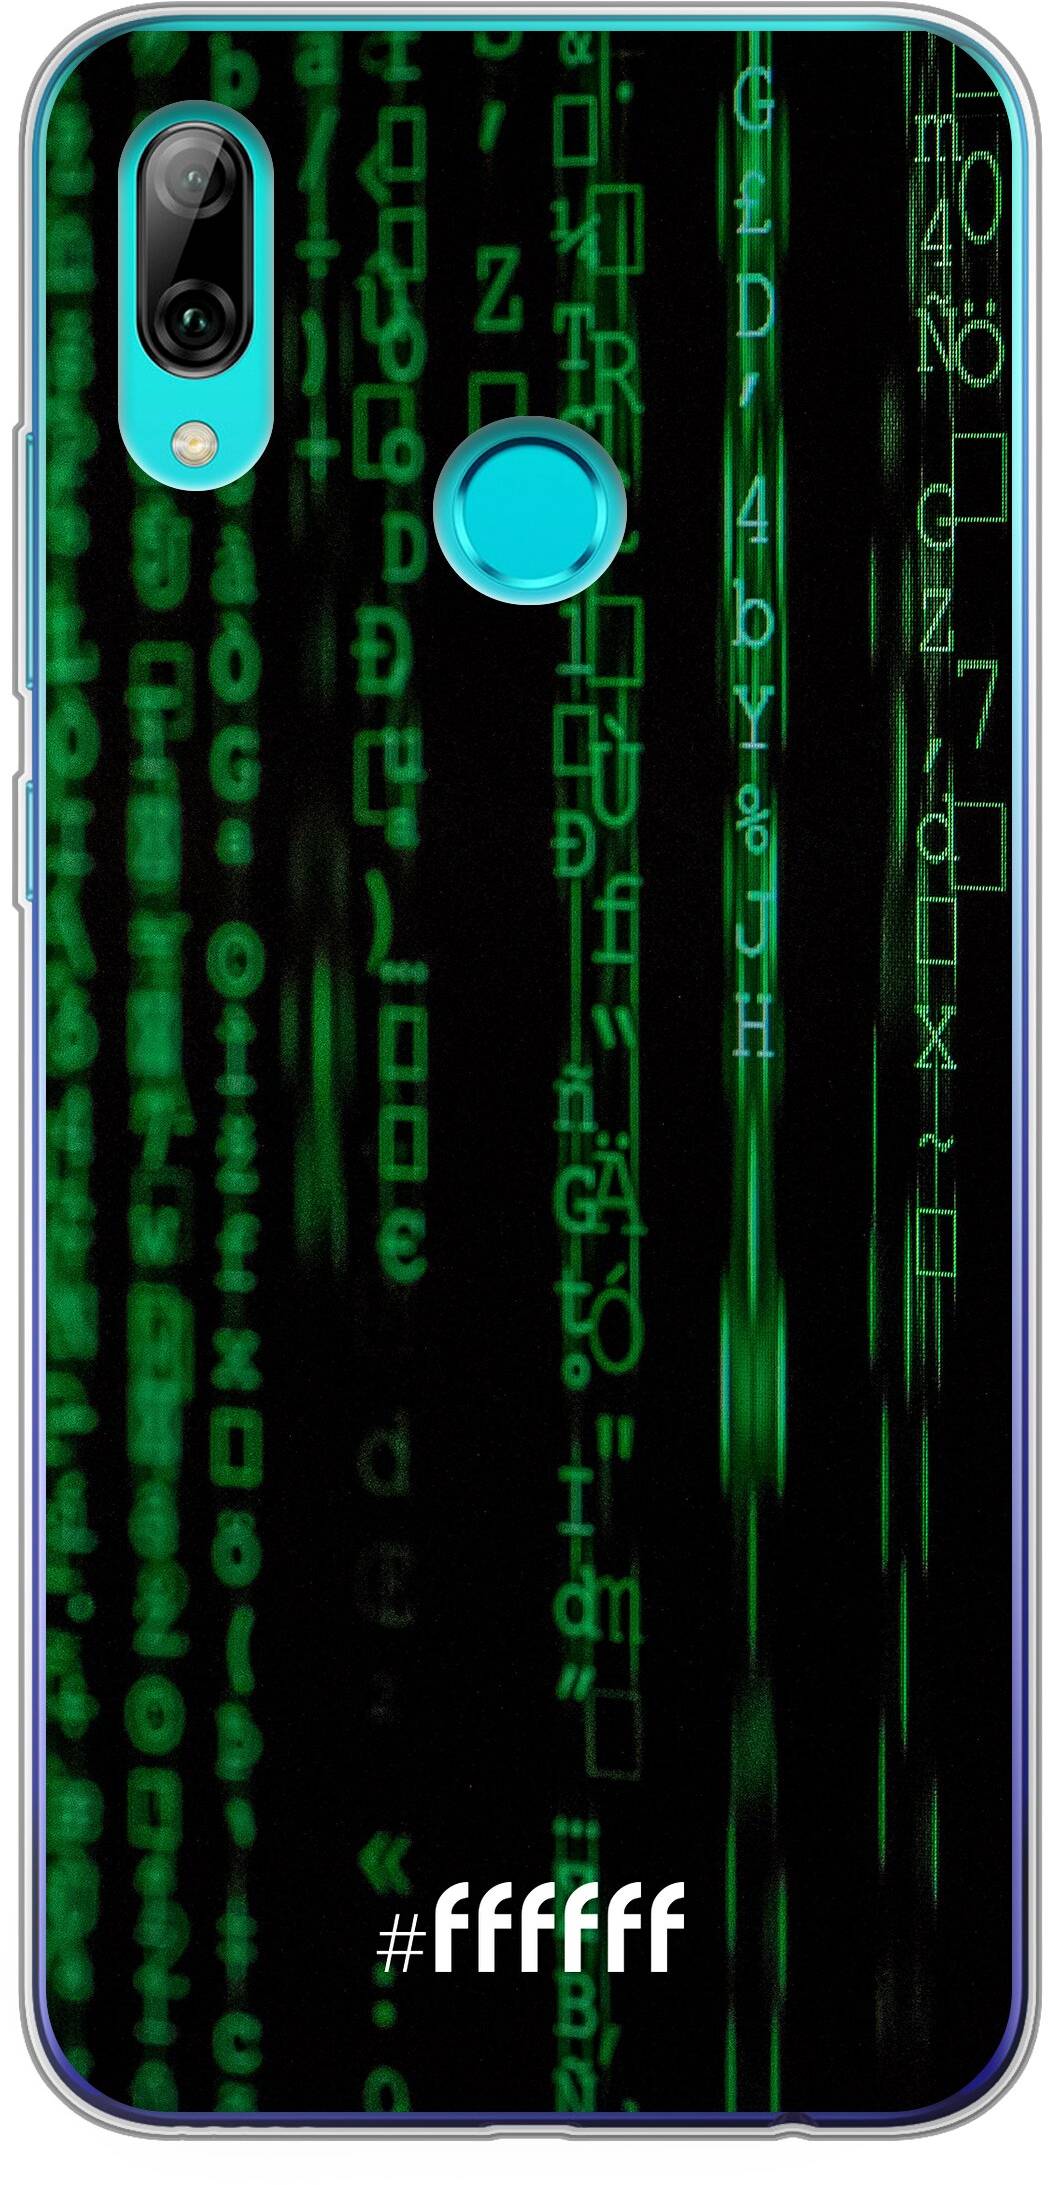 Hacking The Matrix P Smart (2019)